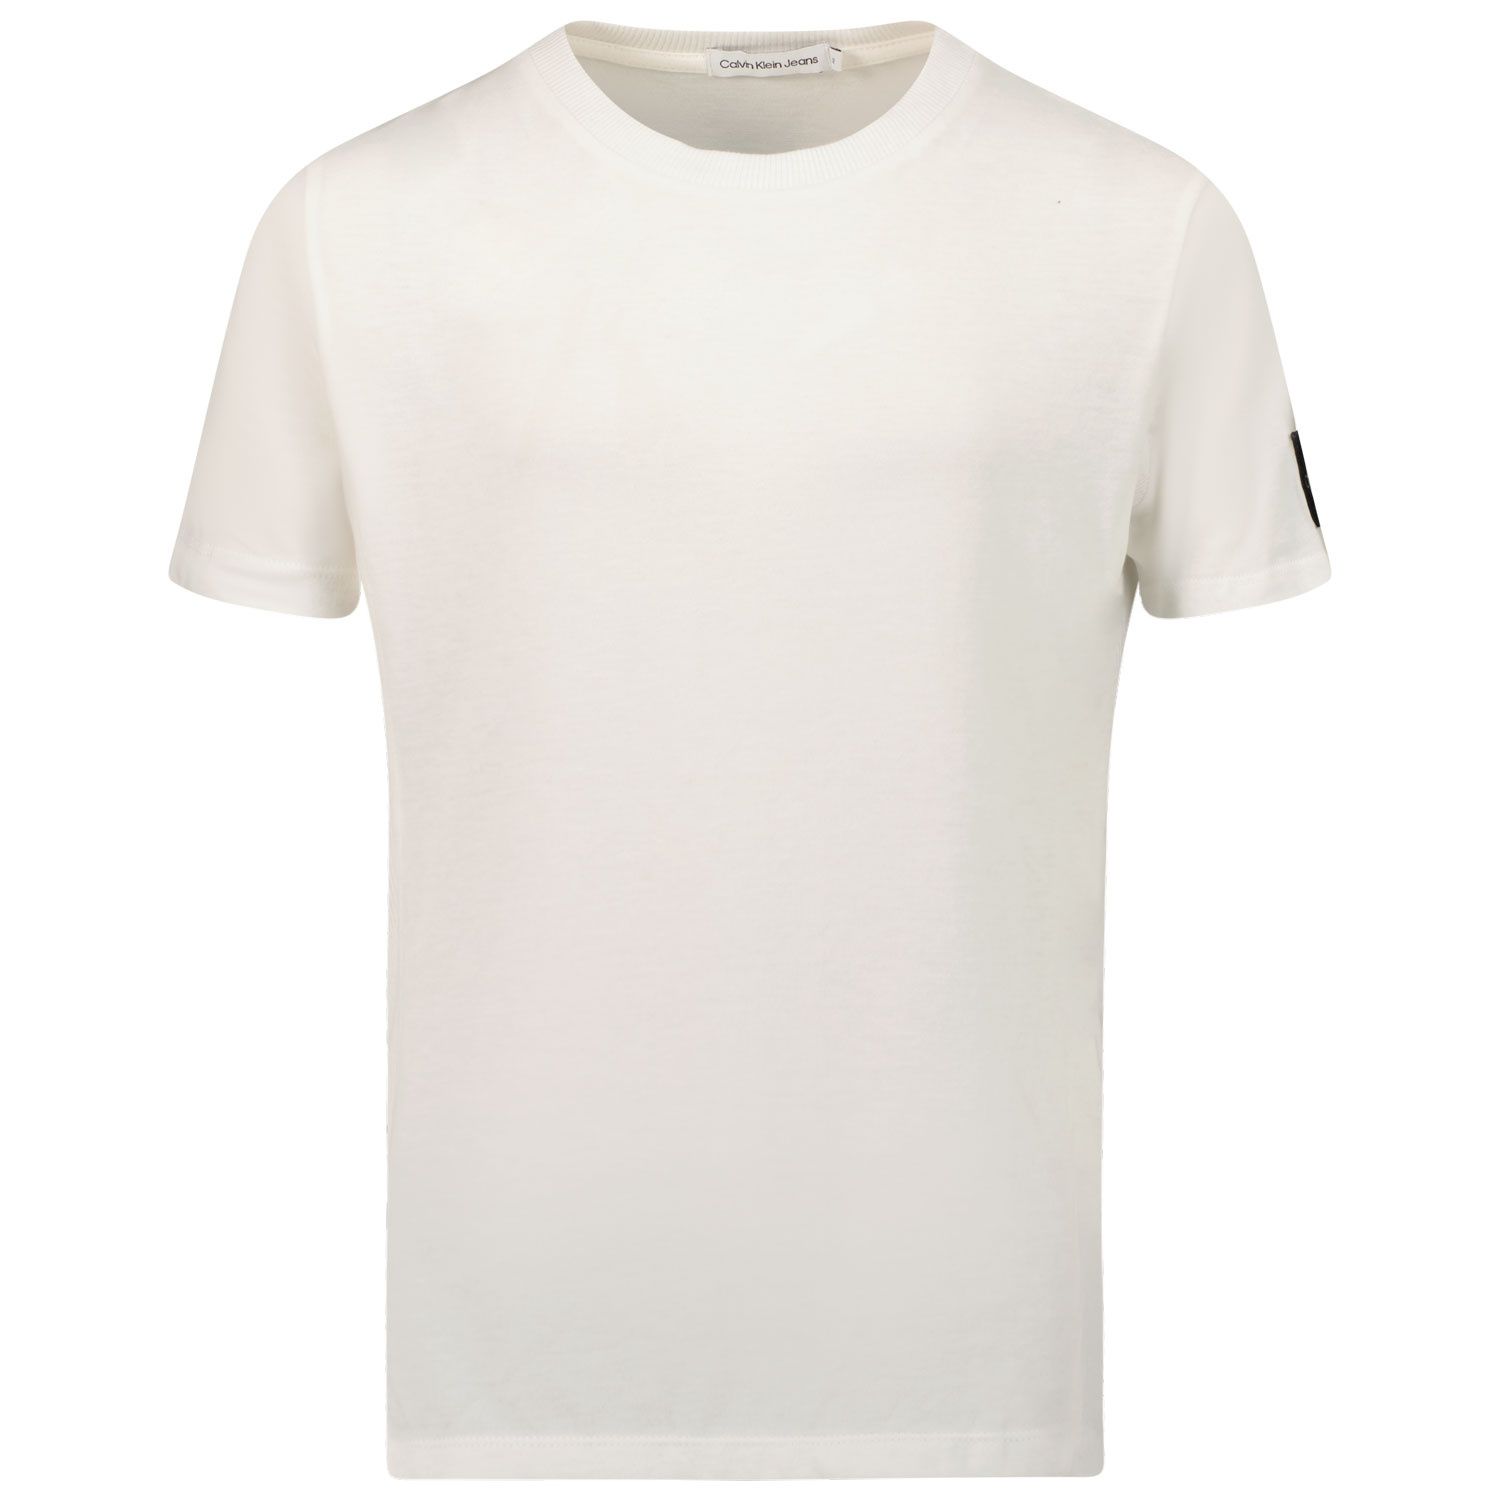 Afbeelding van Calvin Klein IB0IB01113 kinder t-shirt wit